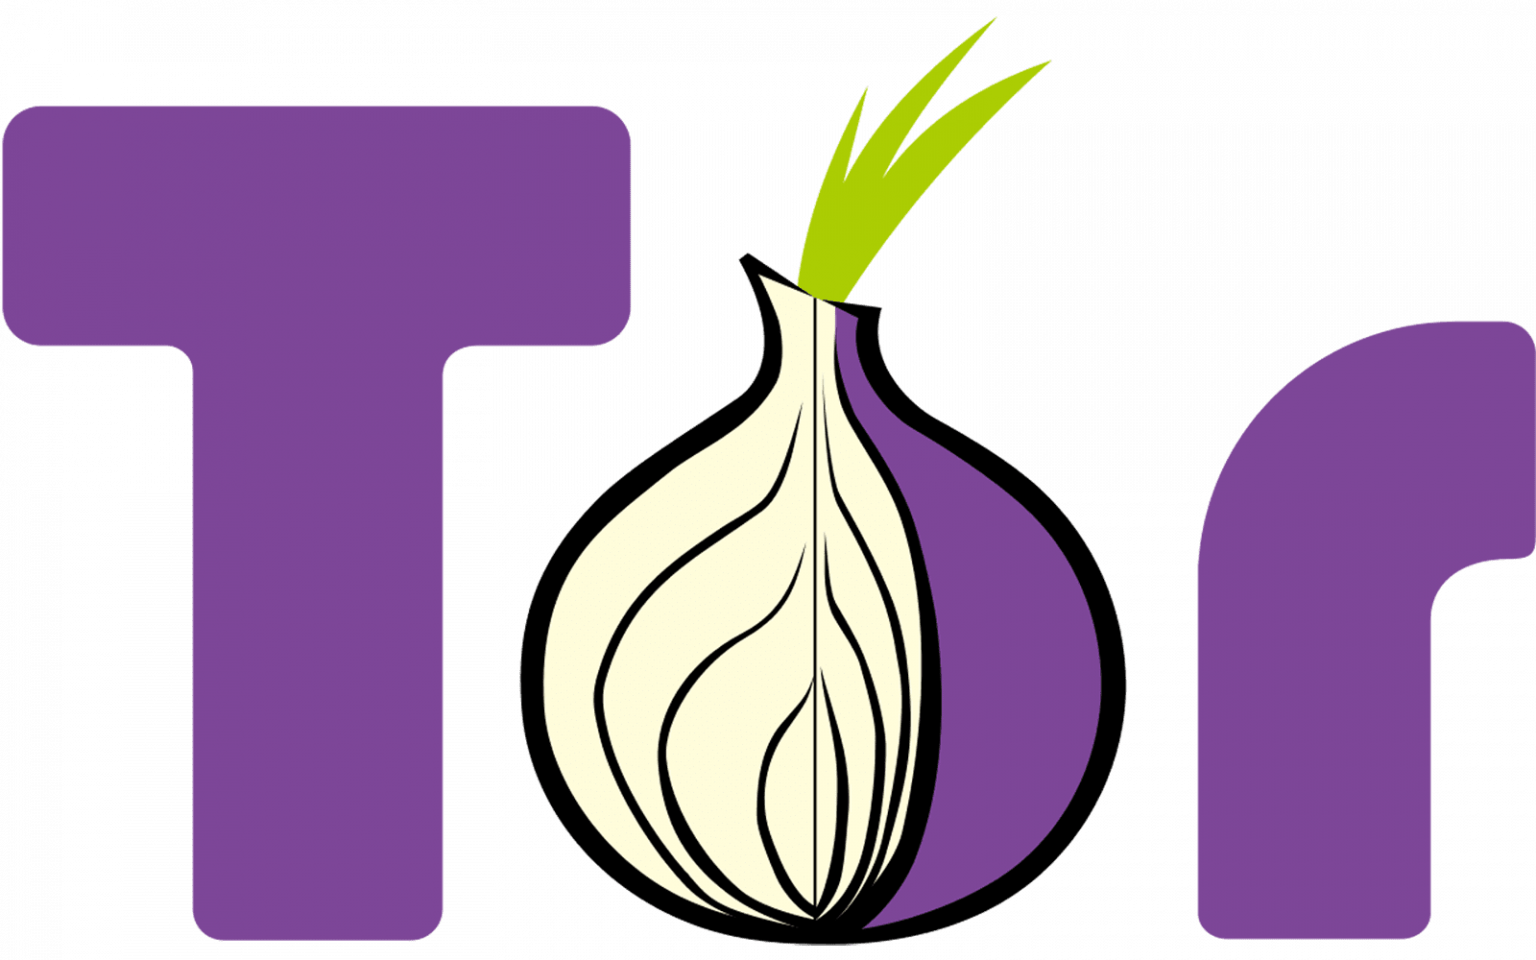 purple onion tor browser